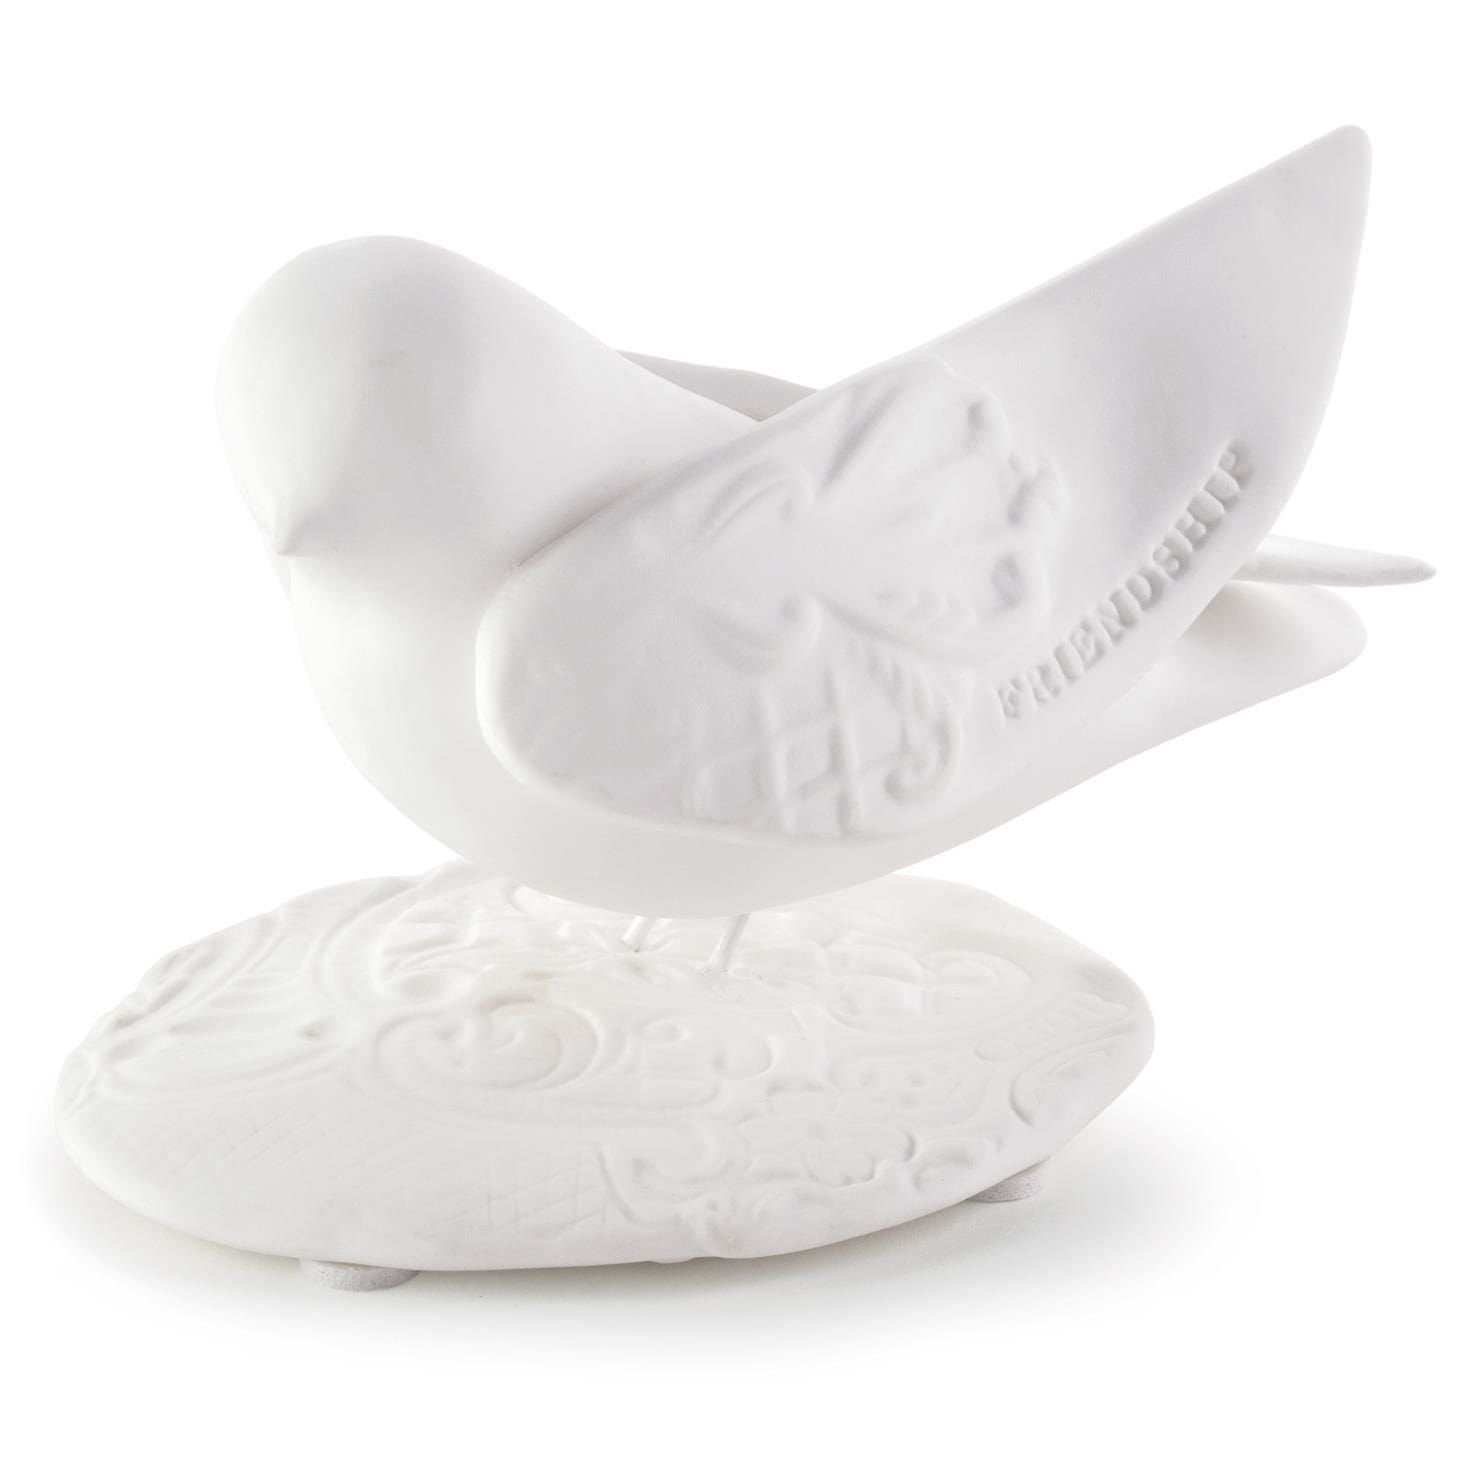 Family Always Ceramic Bird Figurine NEW KIM MALLORY HALLMARK ORNAMENT